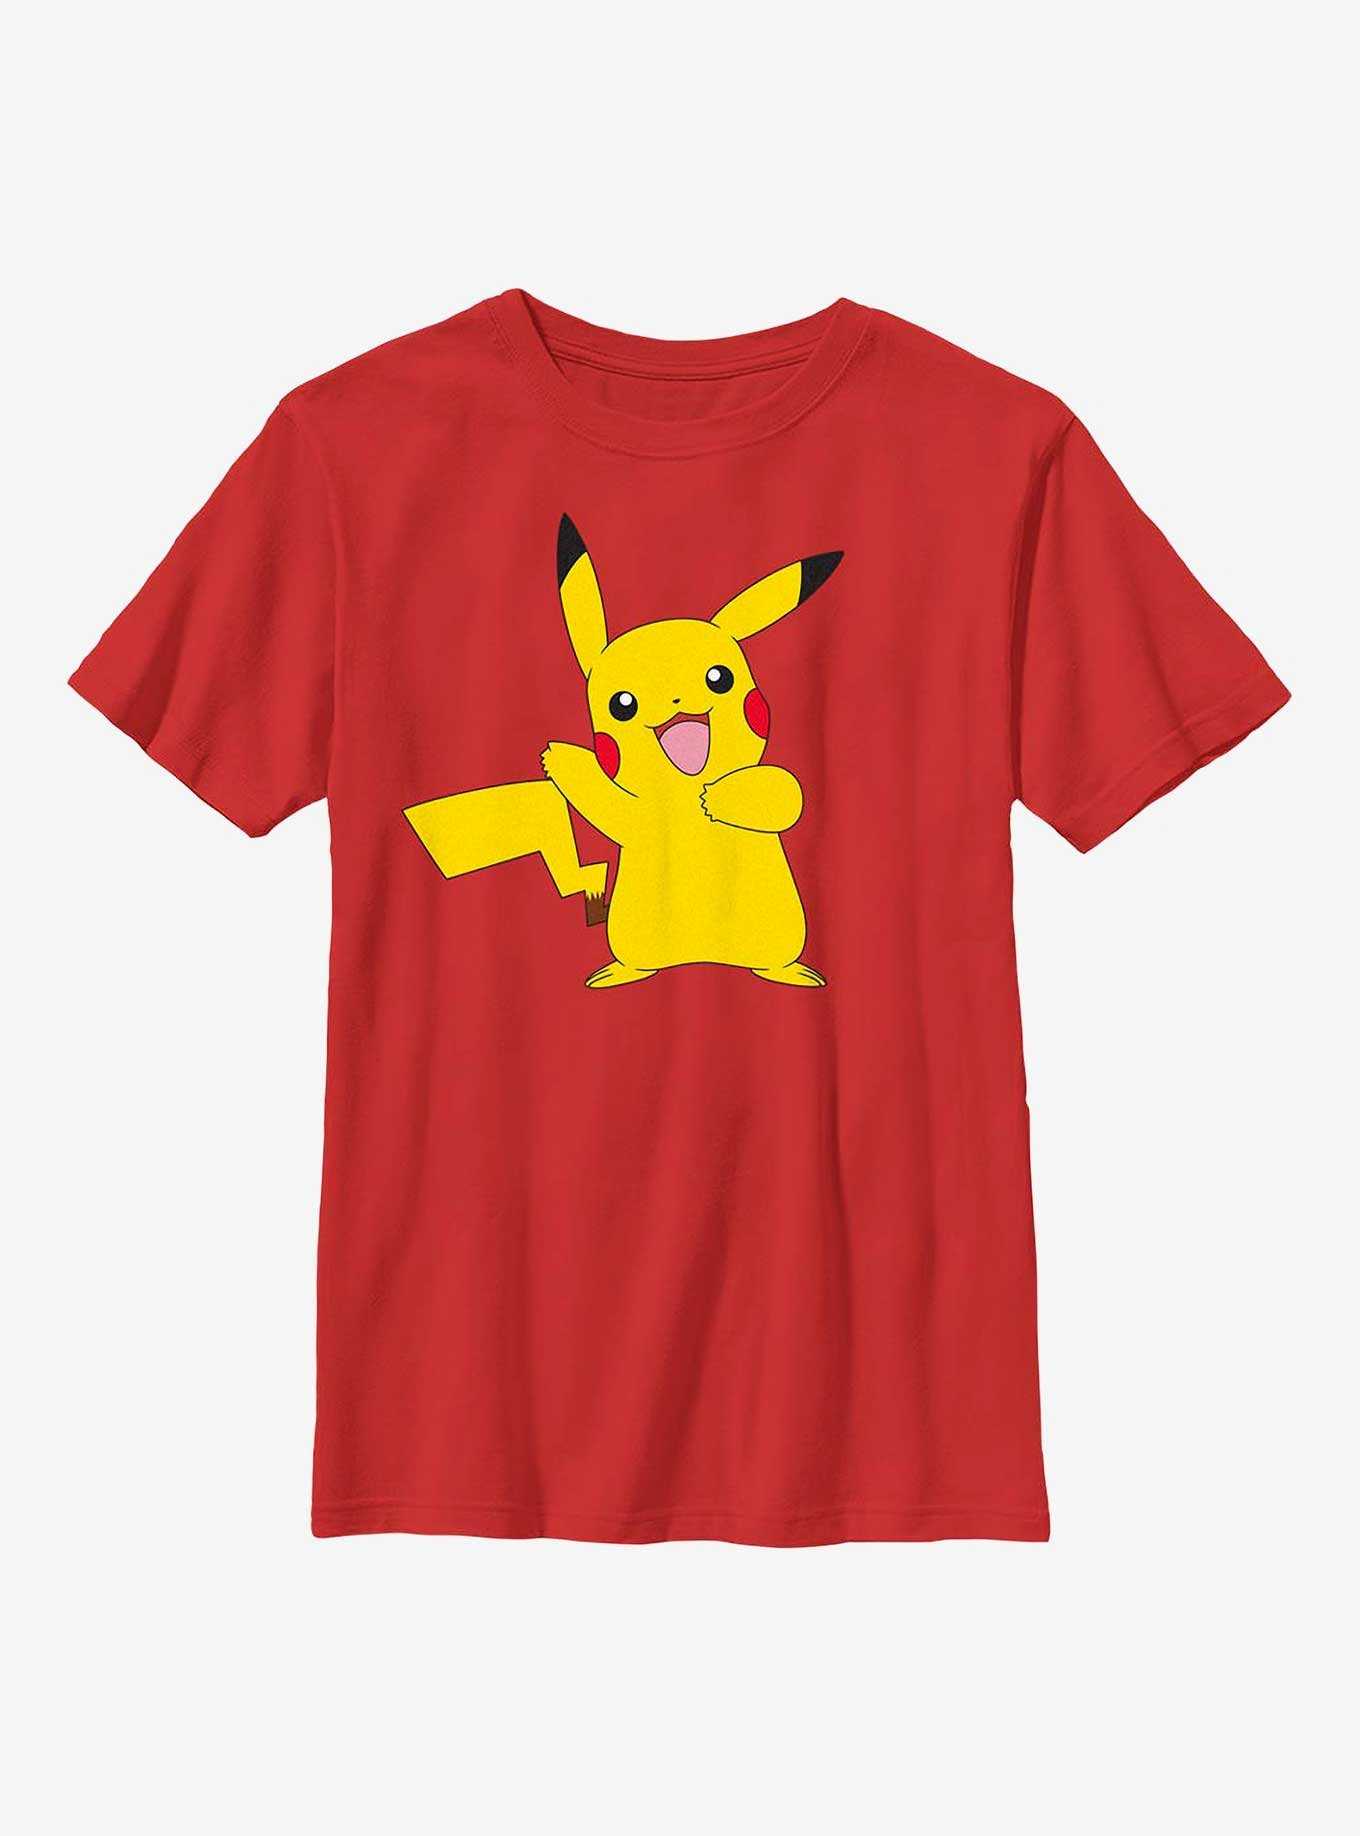 Pokemon Pikachu Dance Youth T-Shirt, , hi-res